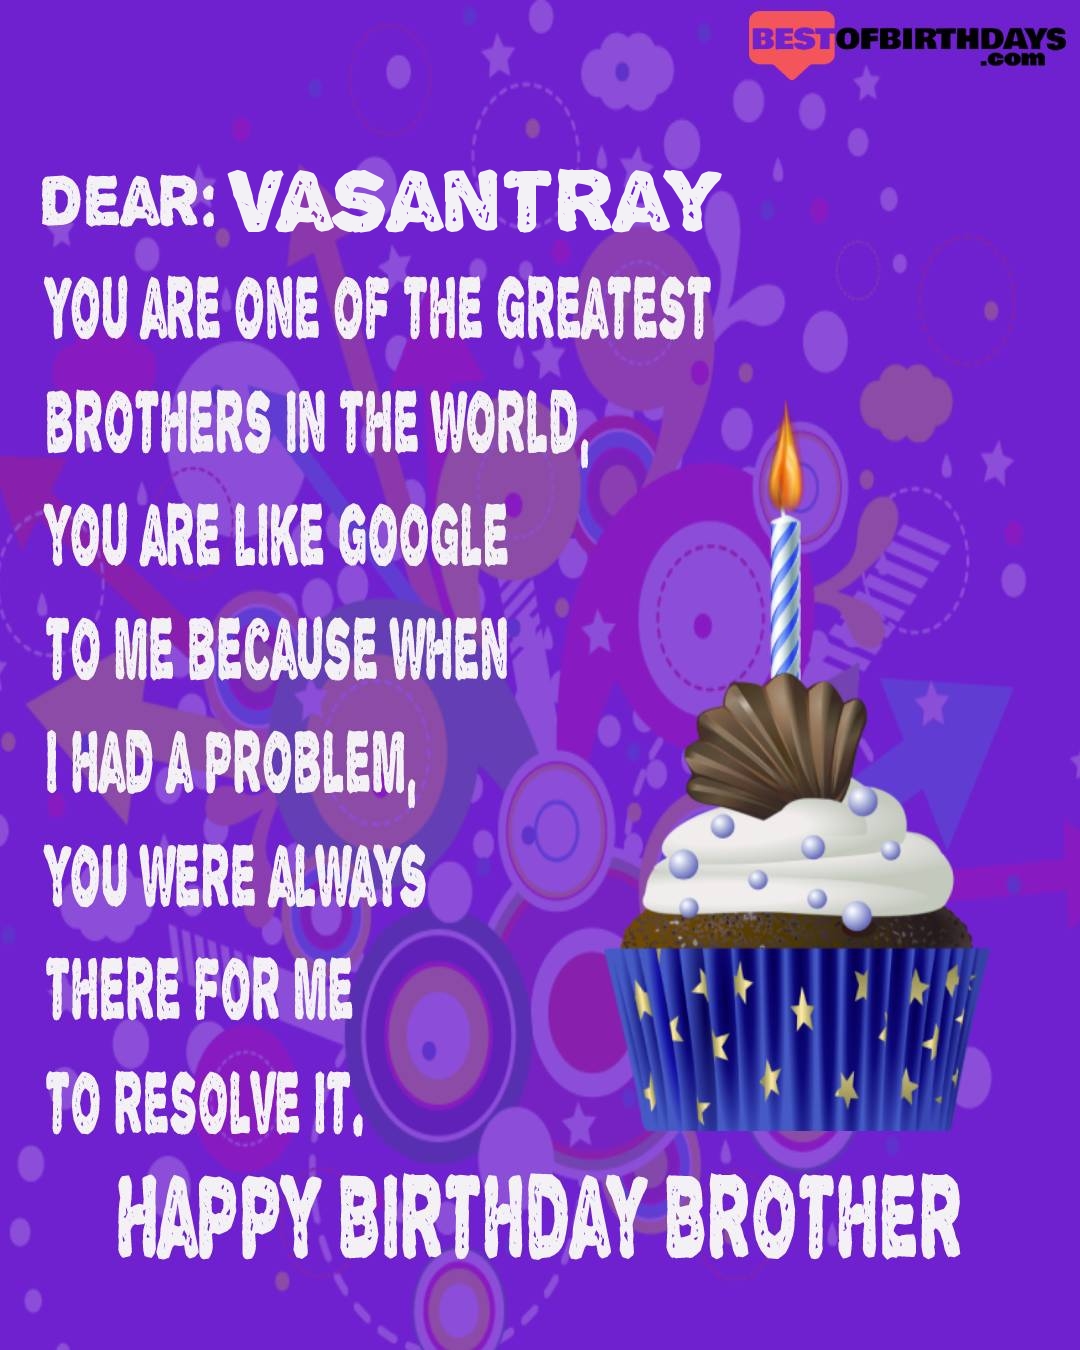 Happy birthday vasantray bhai brother bro